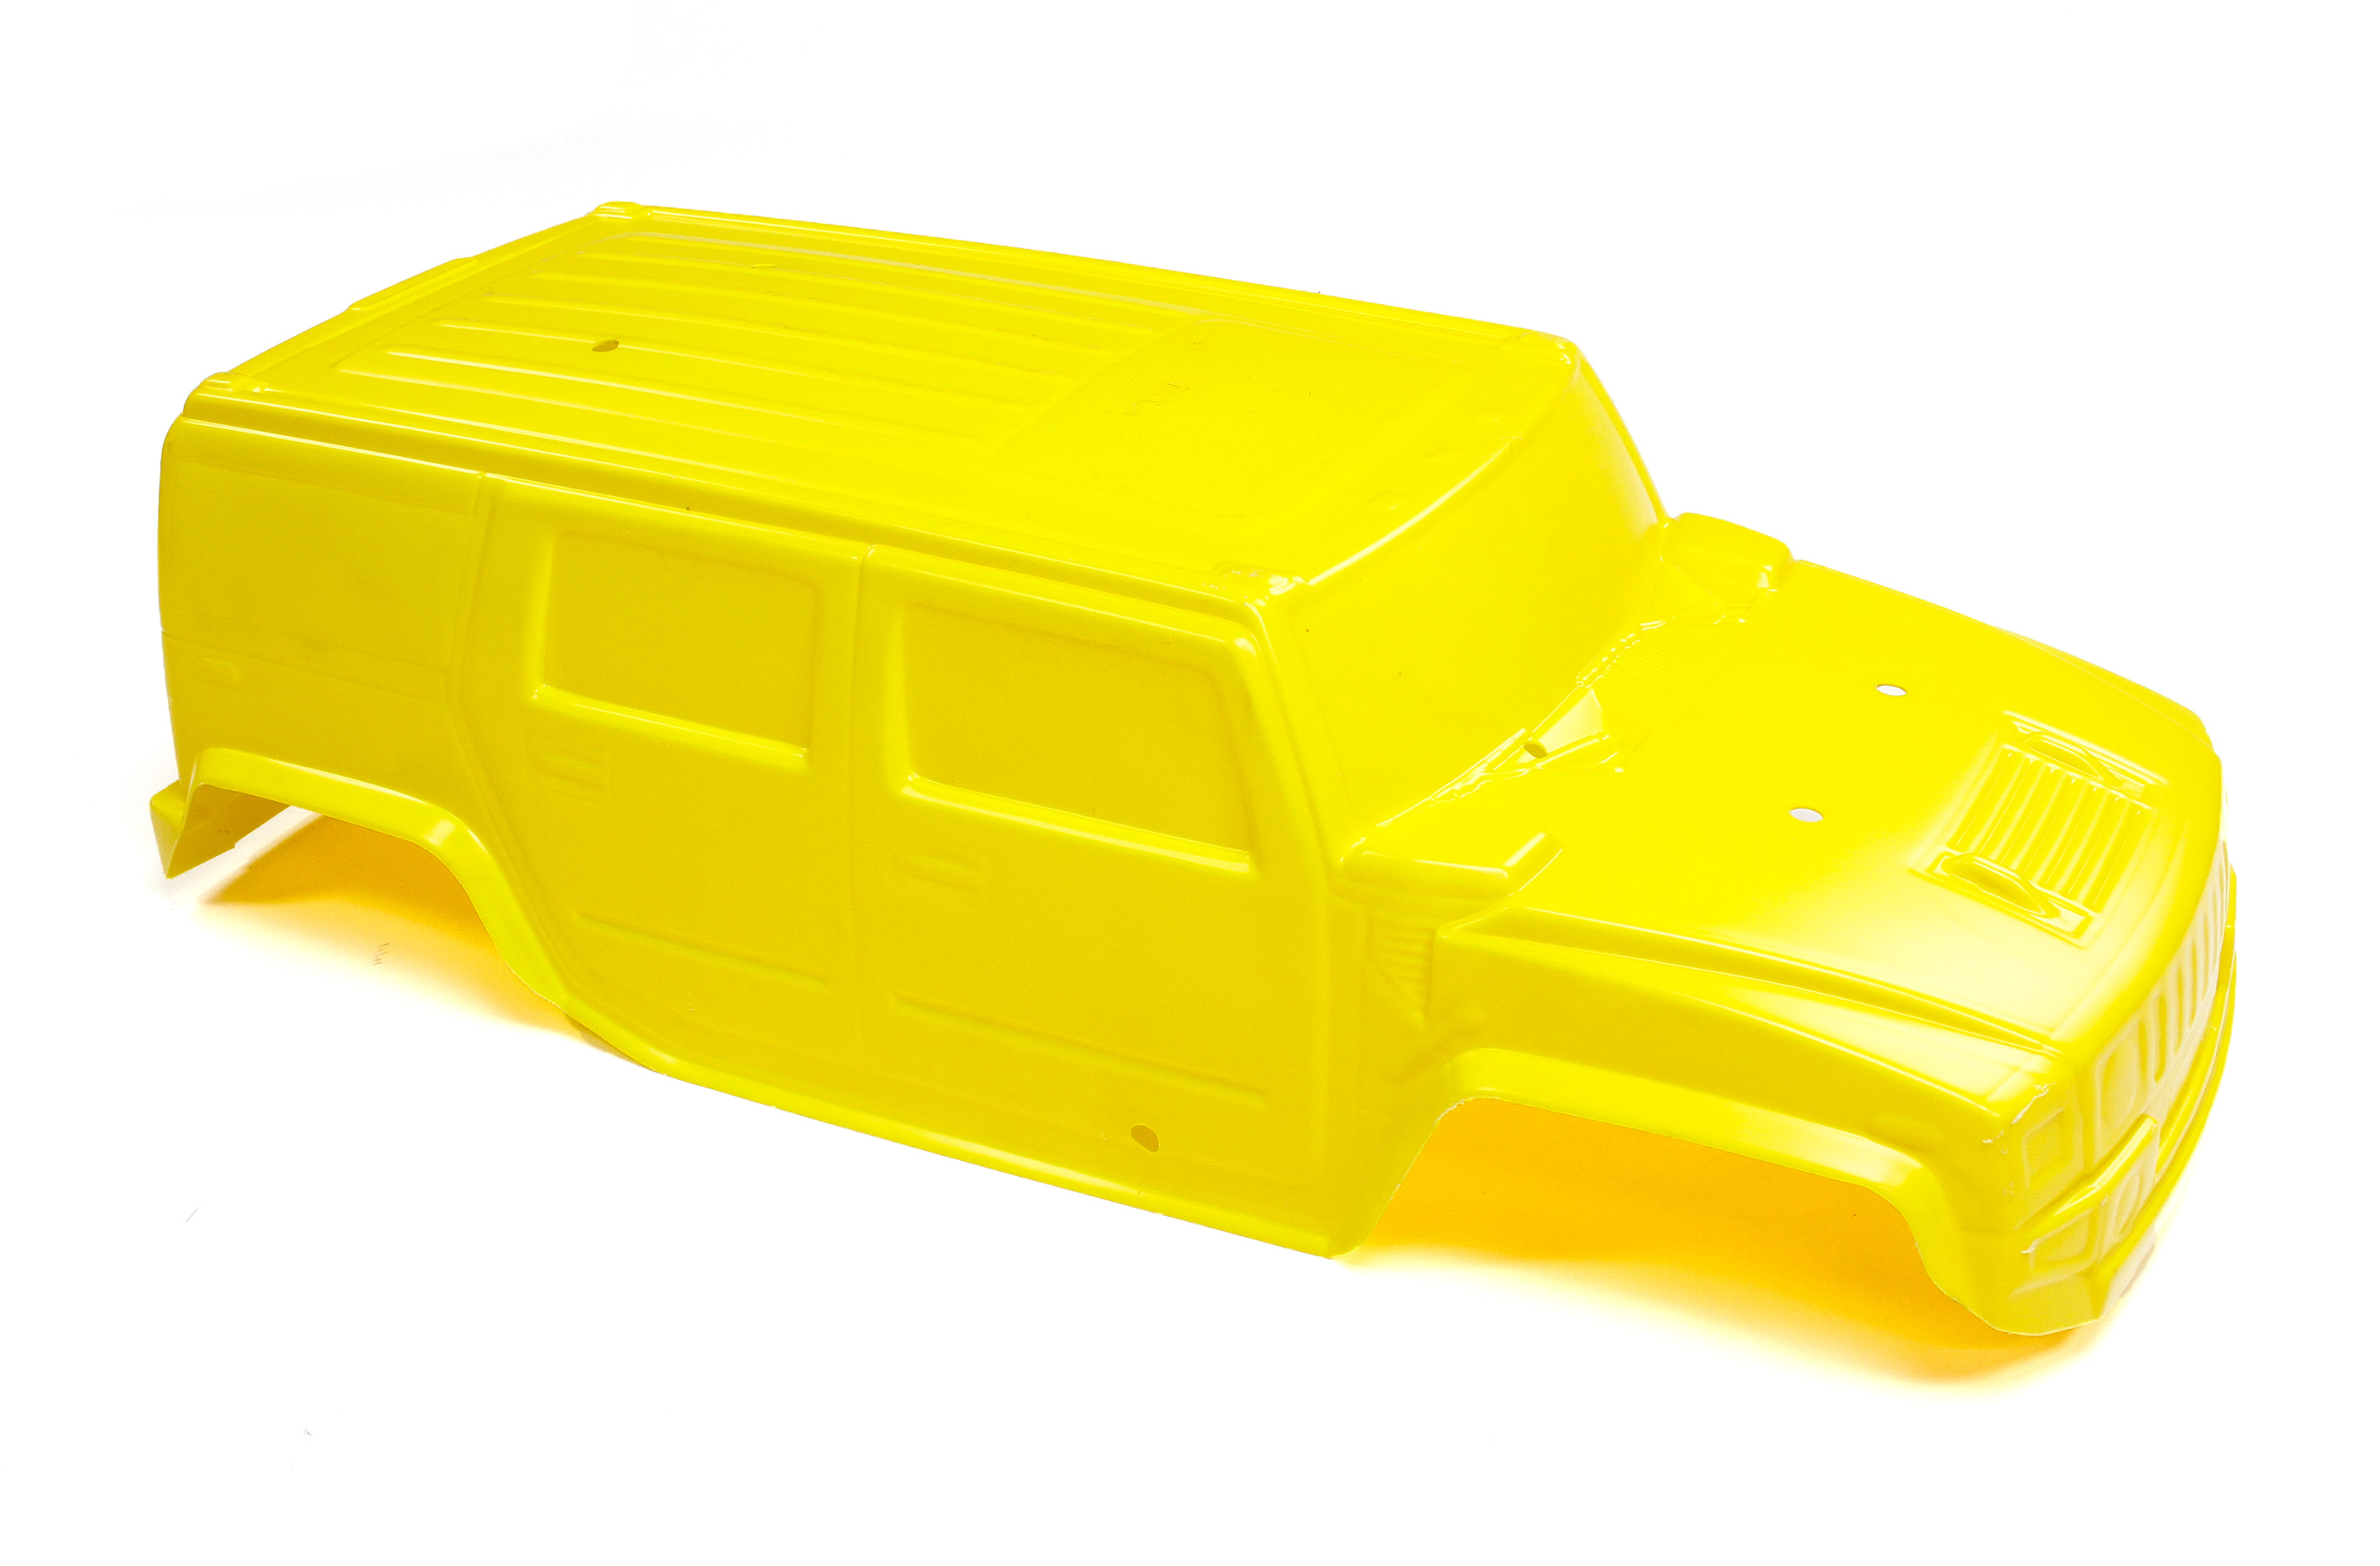 30110 FG Body Monster-/ Stadium-Hummer H2, yellow, for 2WD